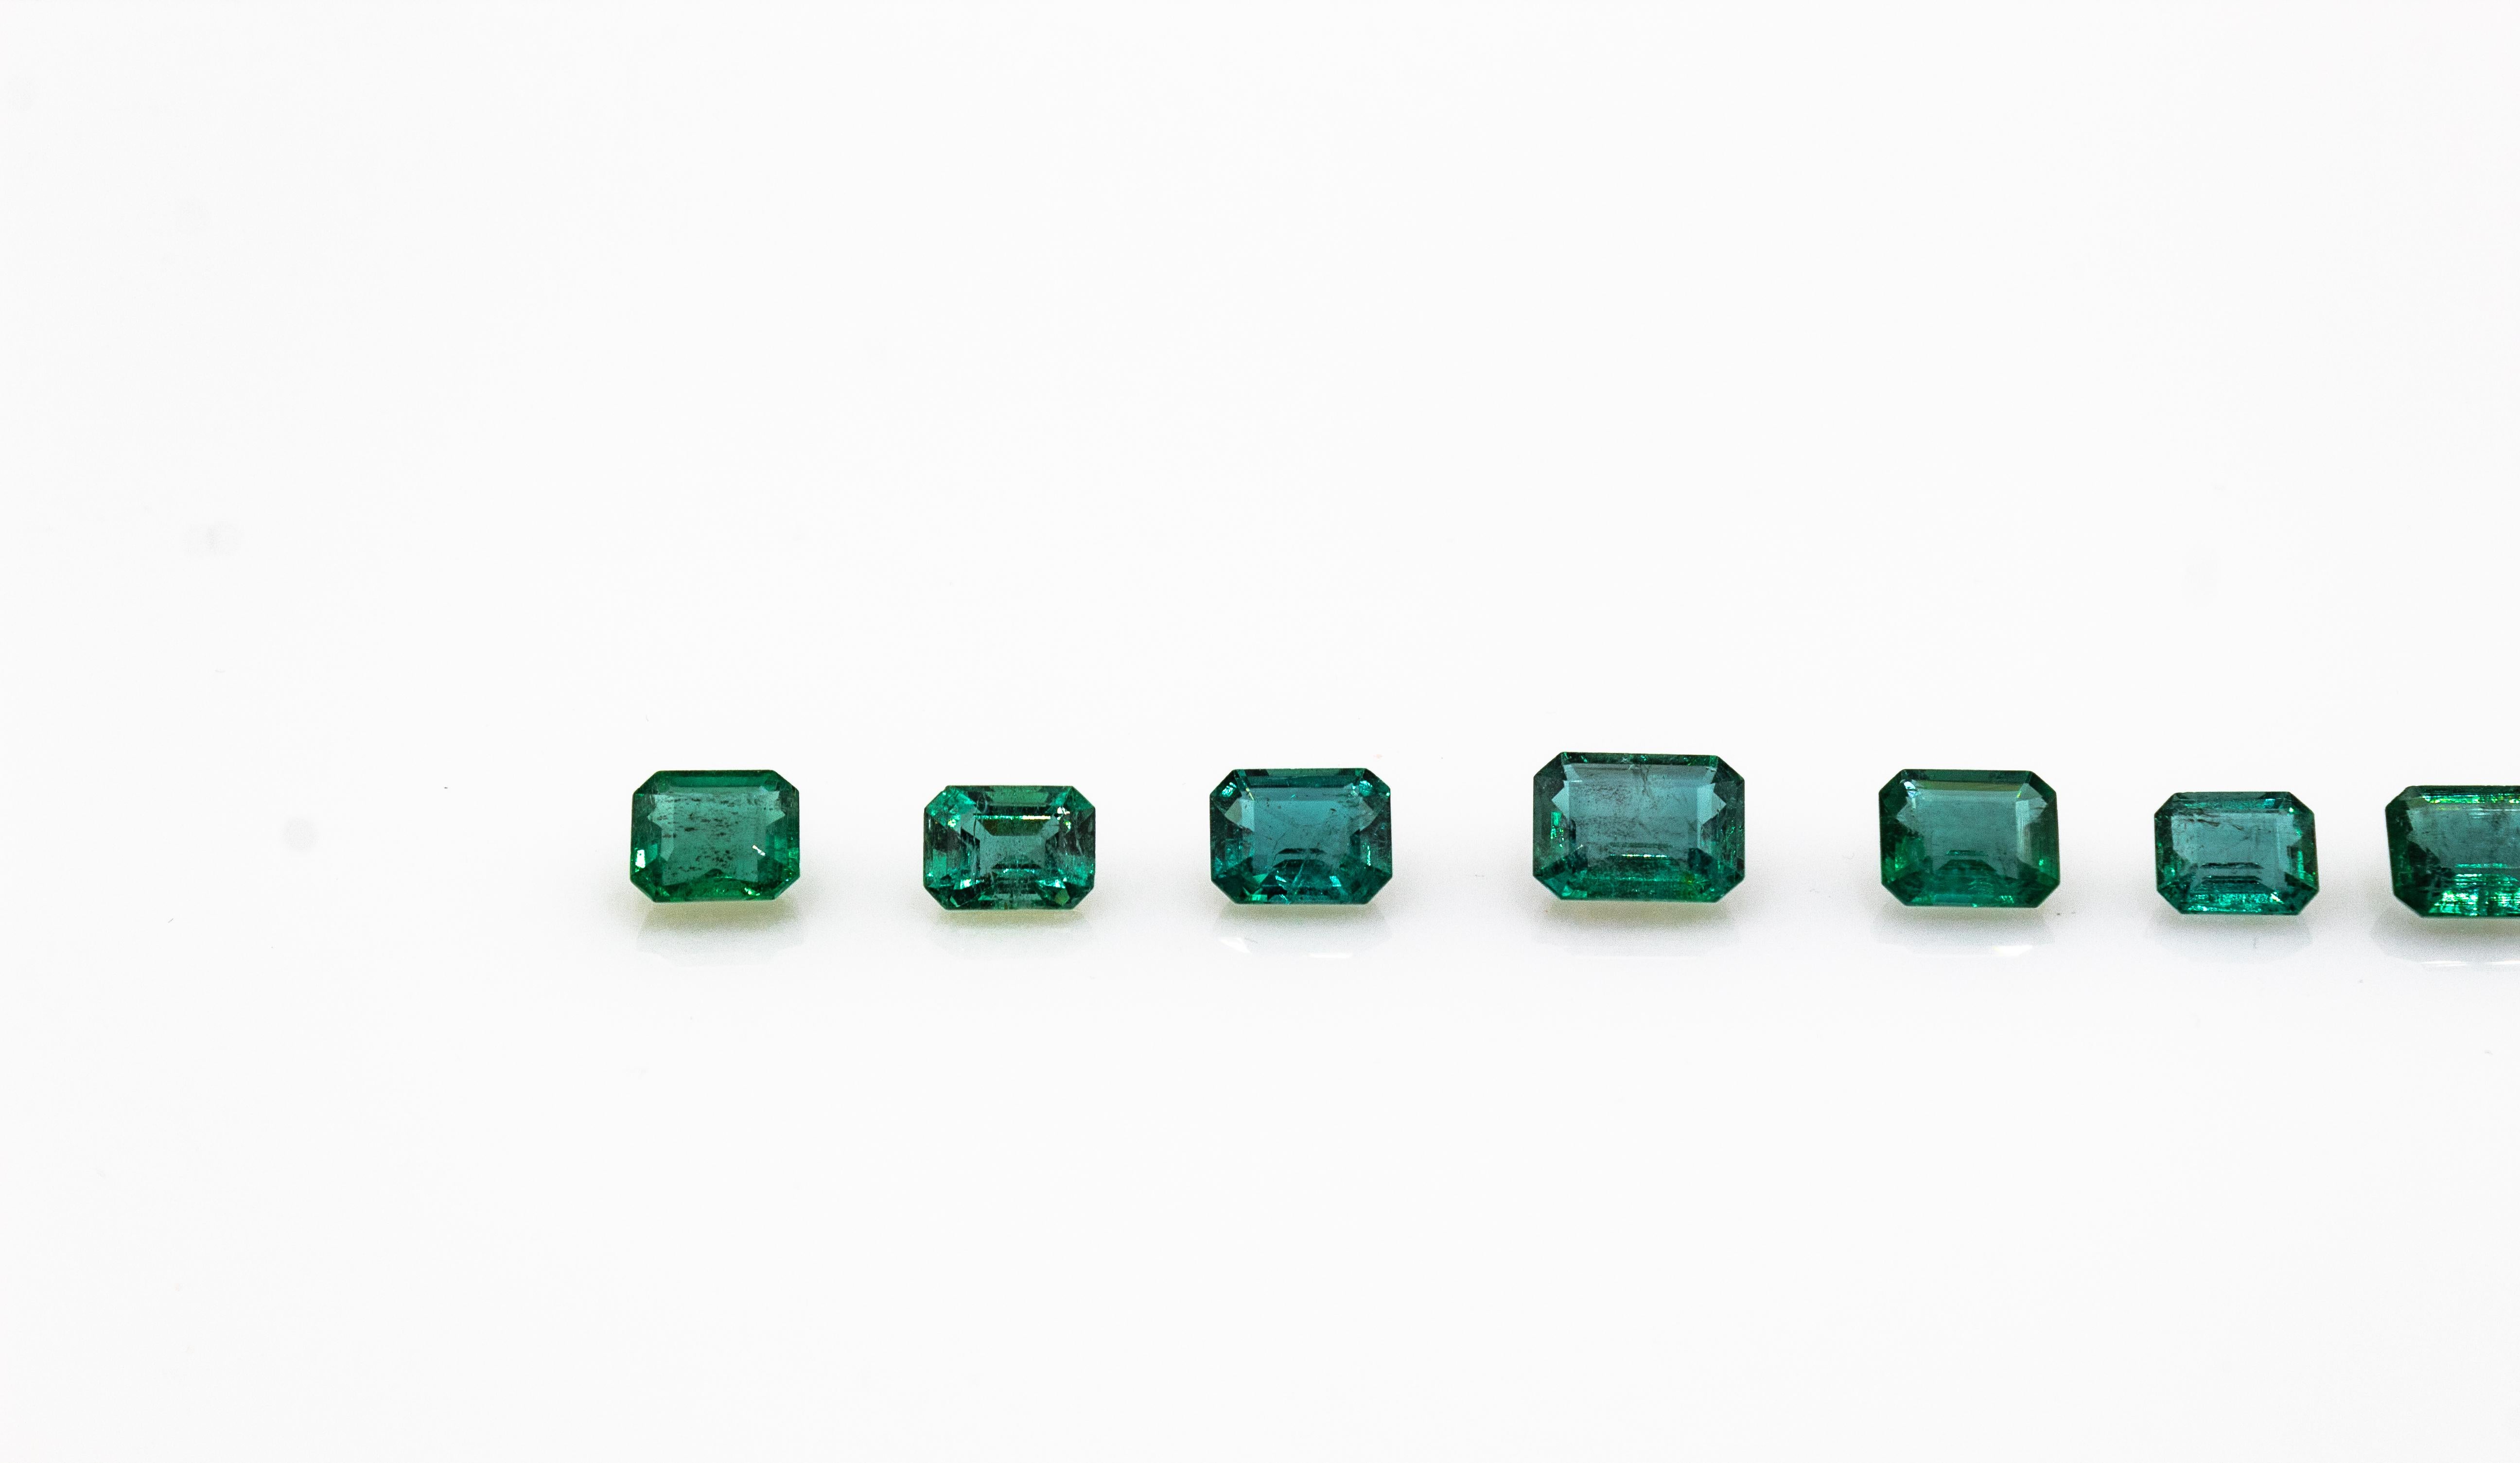 Certifiable Zambia Octagon Cut 4.18 Carat Emerald Loose Gemstone 2